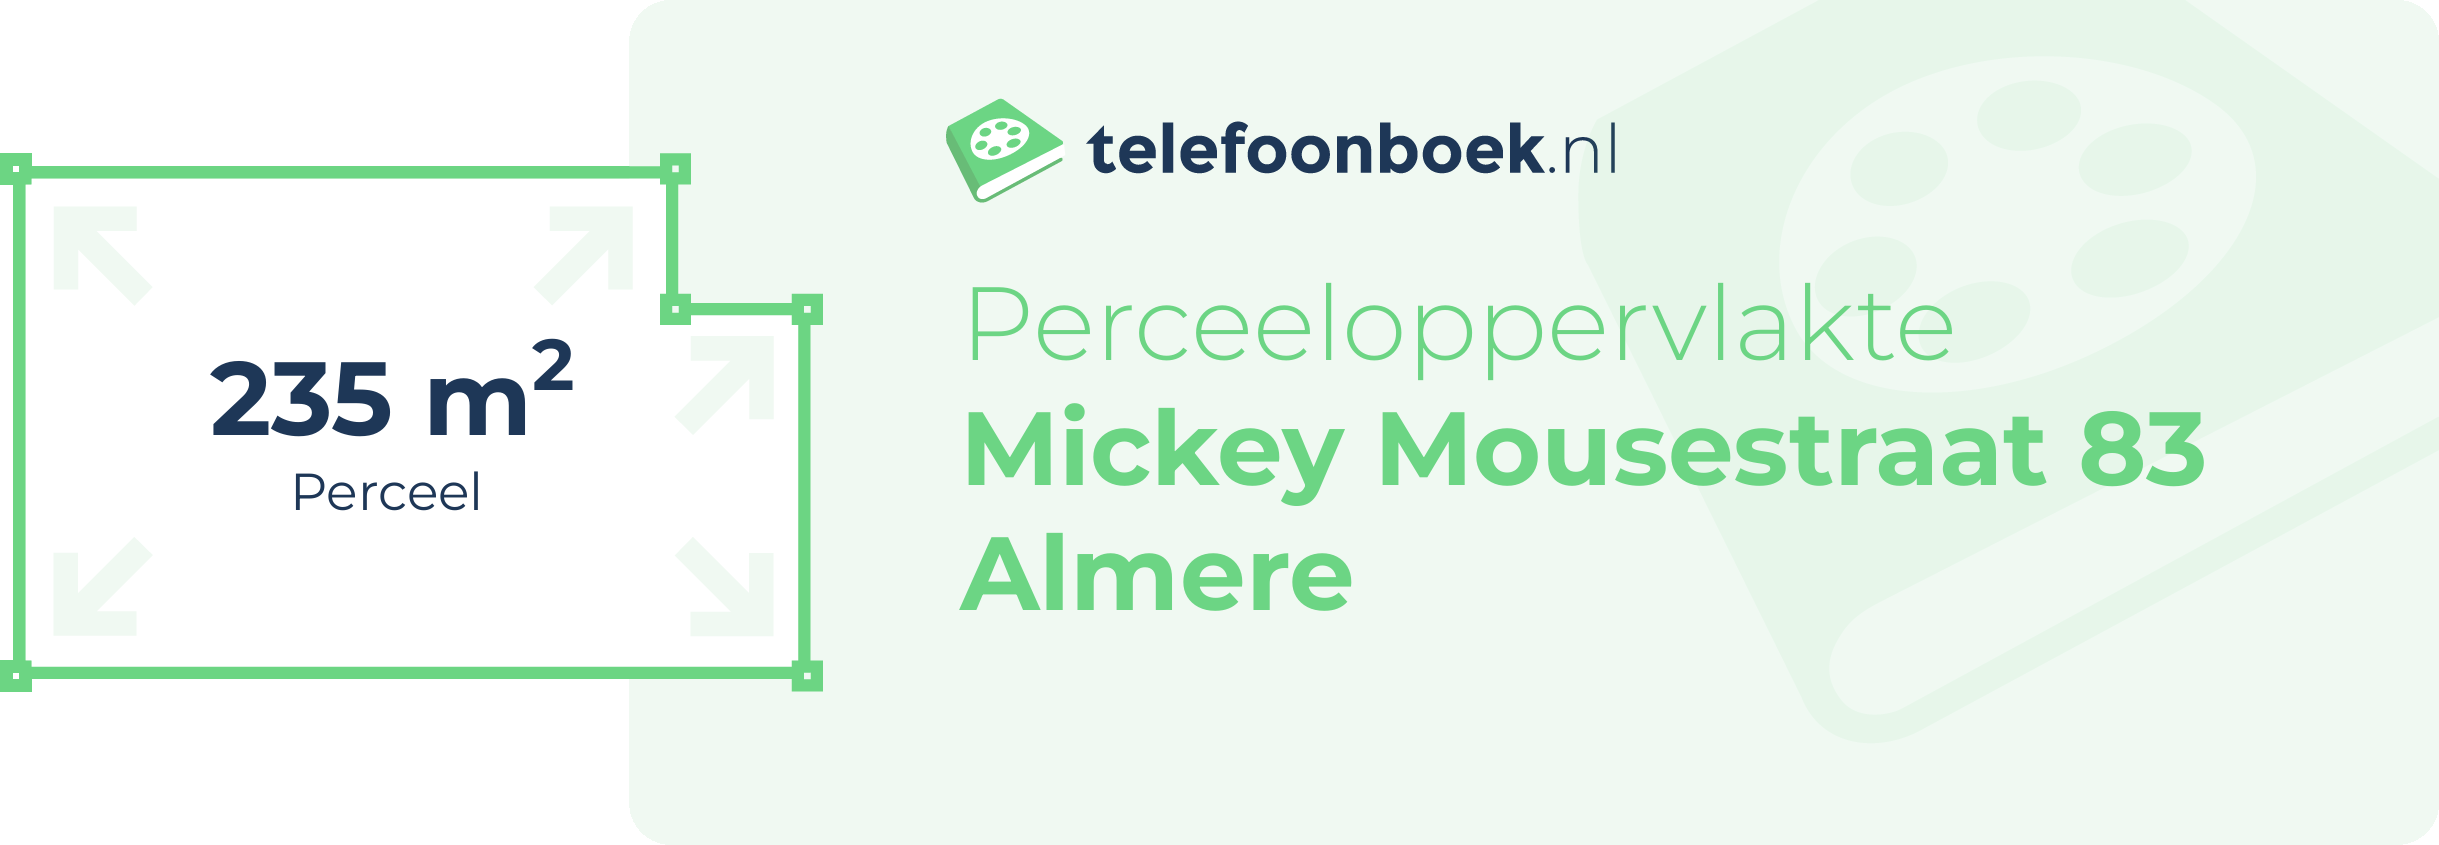 Perceeloppervlakte Mickey Mousestraat 83 Almere